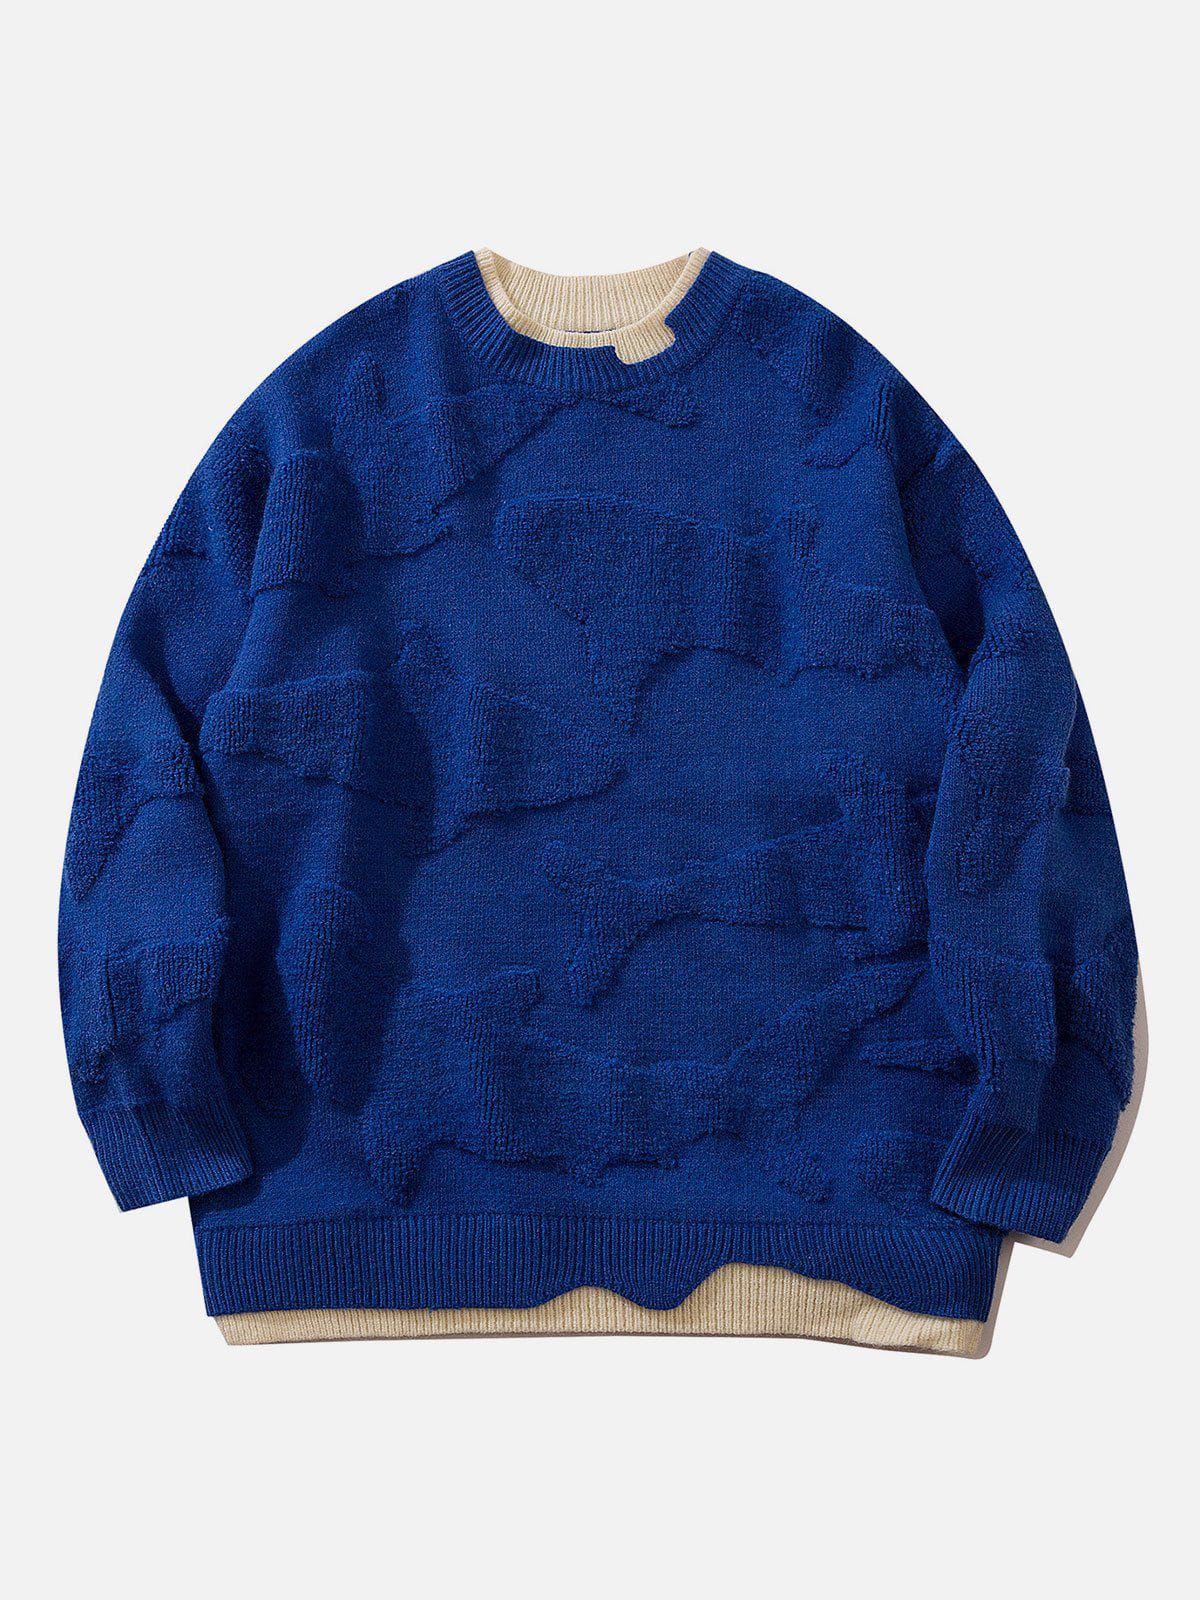 3D Whale Jacquard Knit Sweater